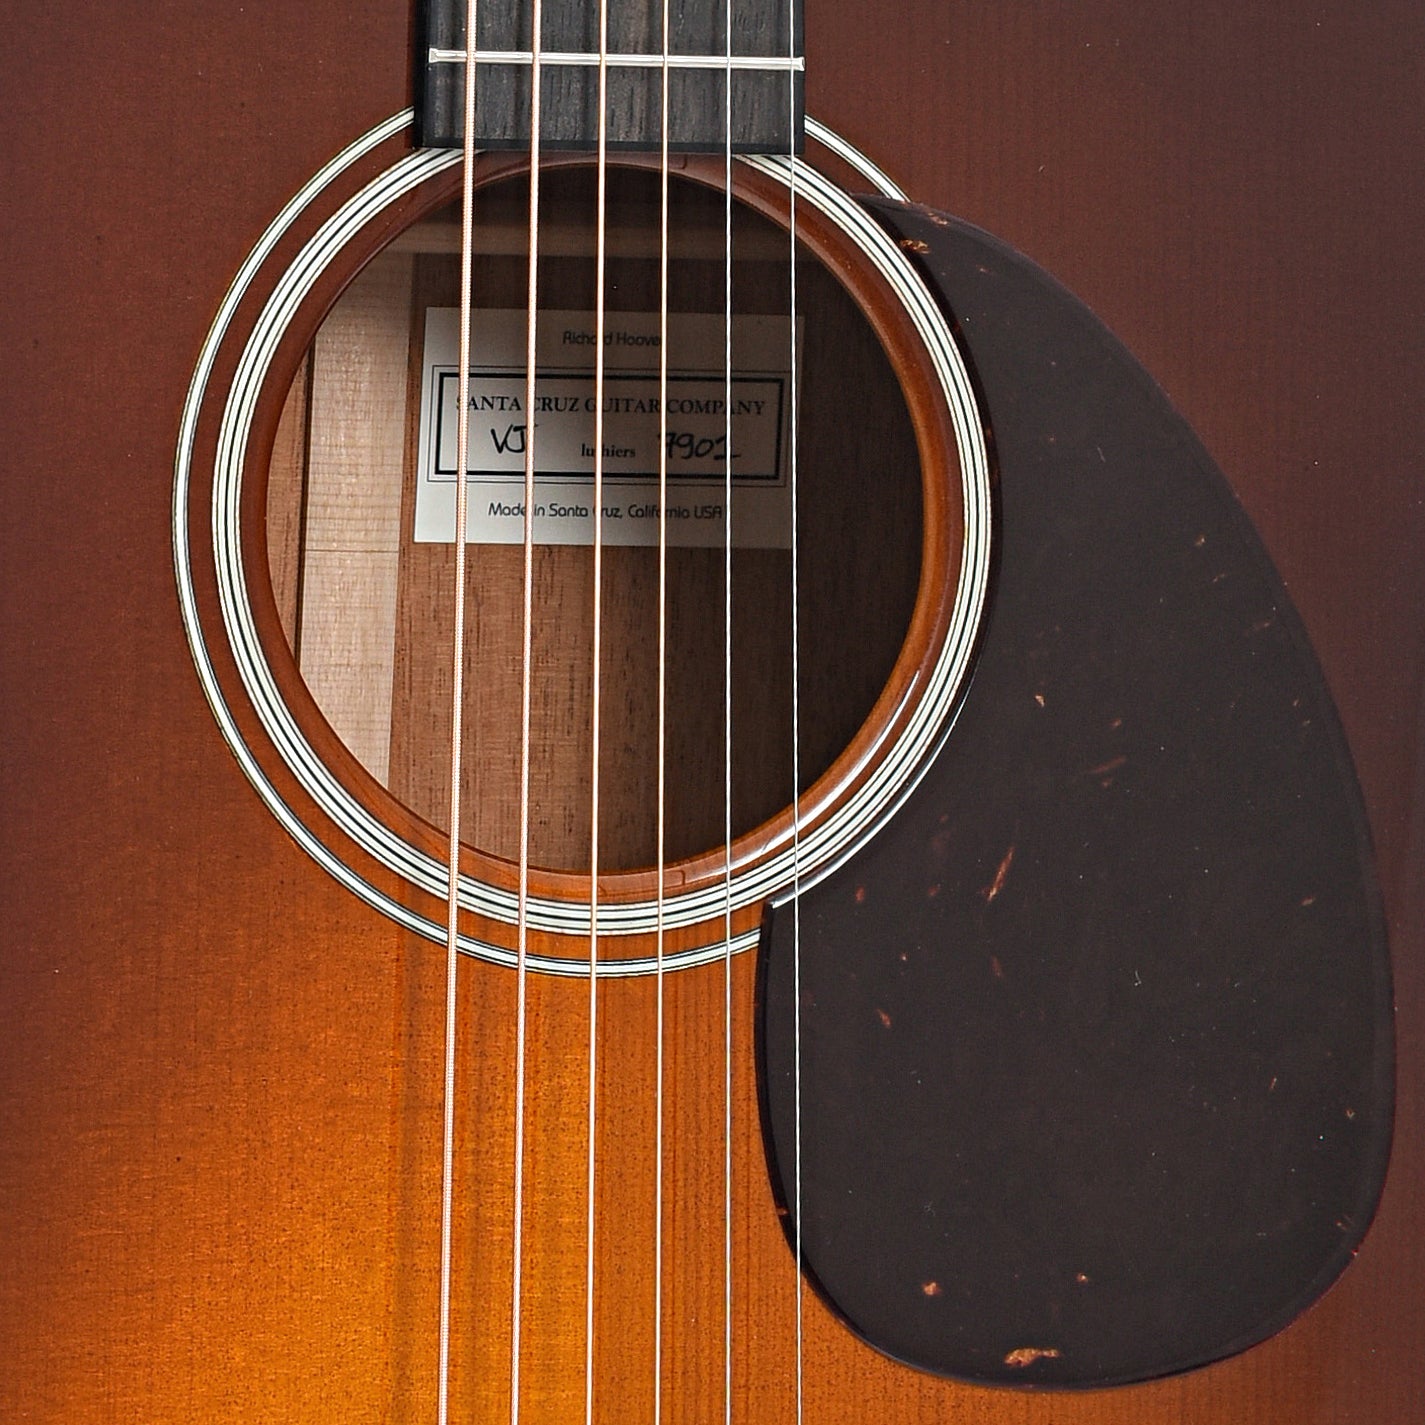 Sound hole and pickguard of Santa Cruz Custom Vintage Jumbo Acoustic Guitar